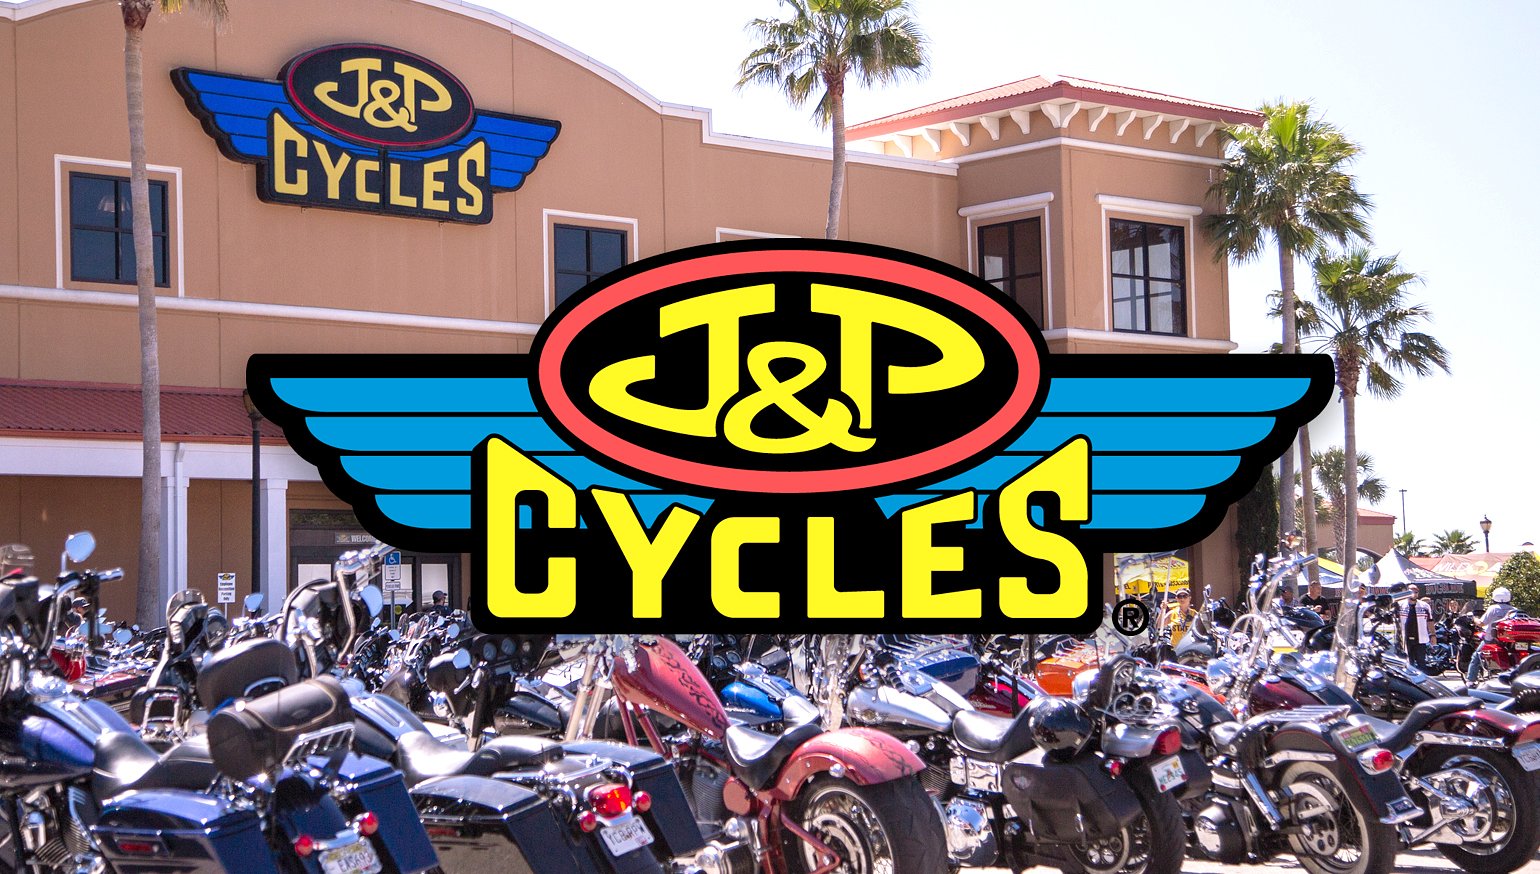 J&P cycles